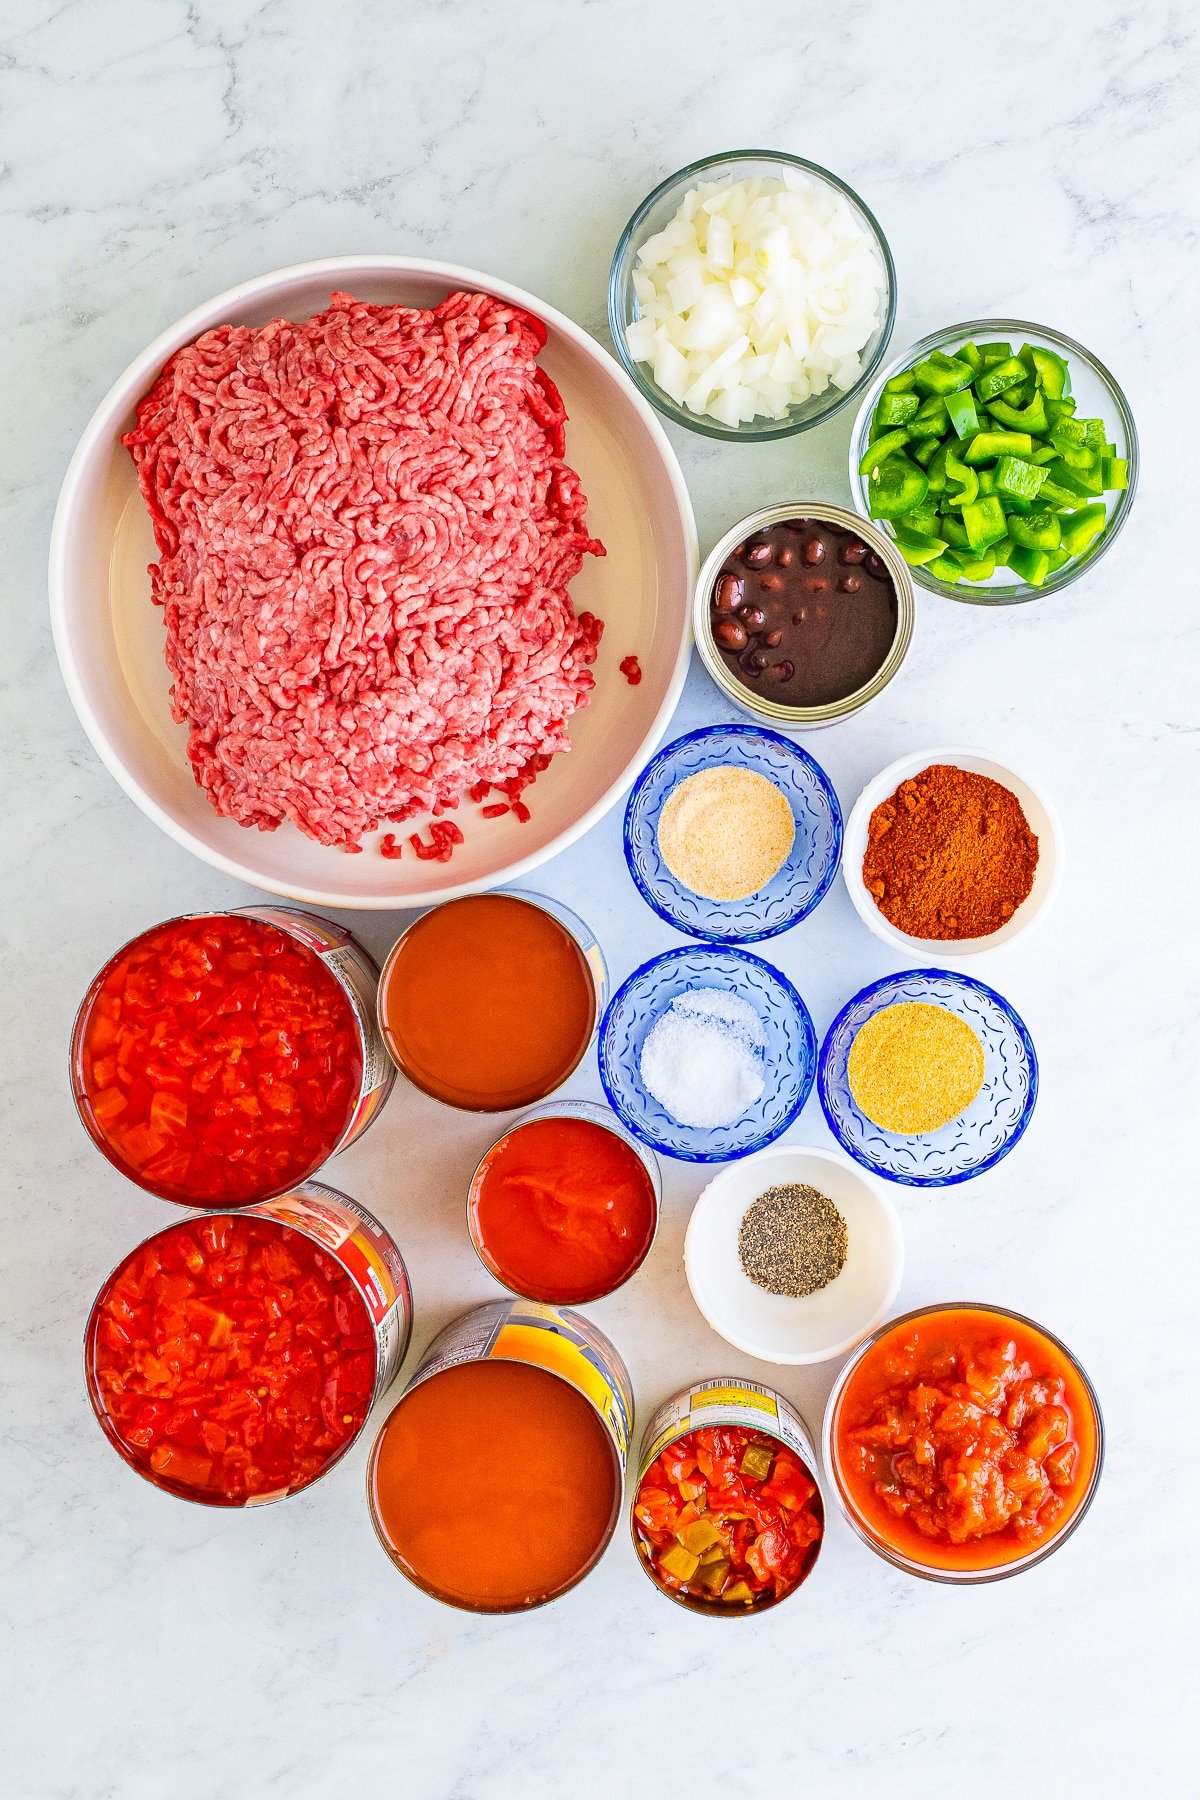 ingredients needed to make Award Winning Chili Recipe